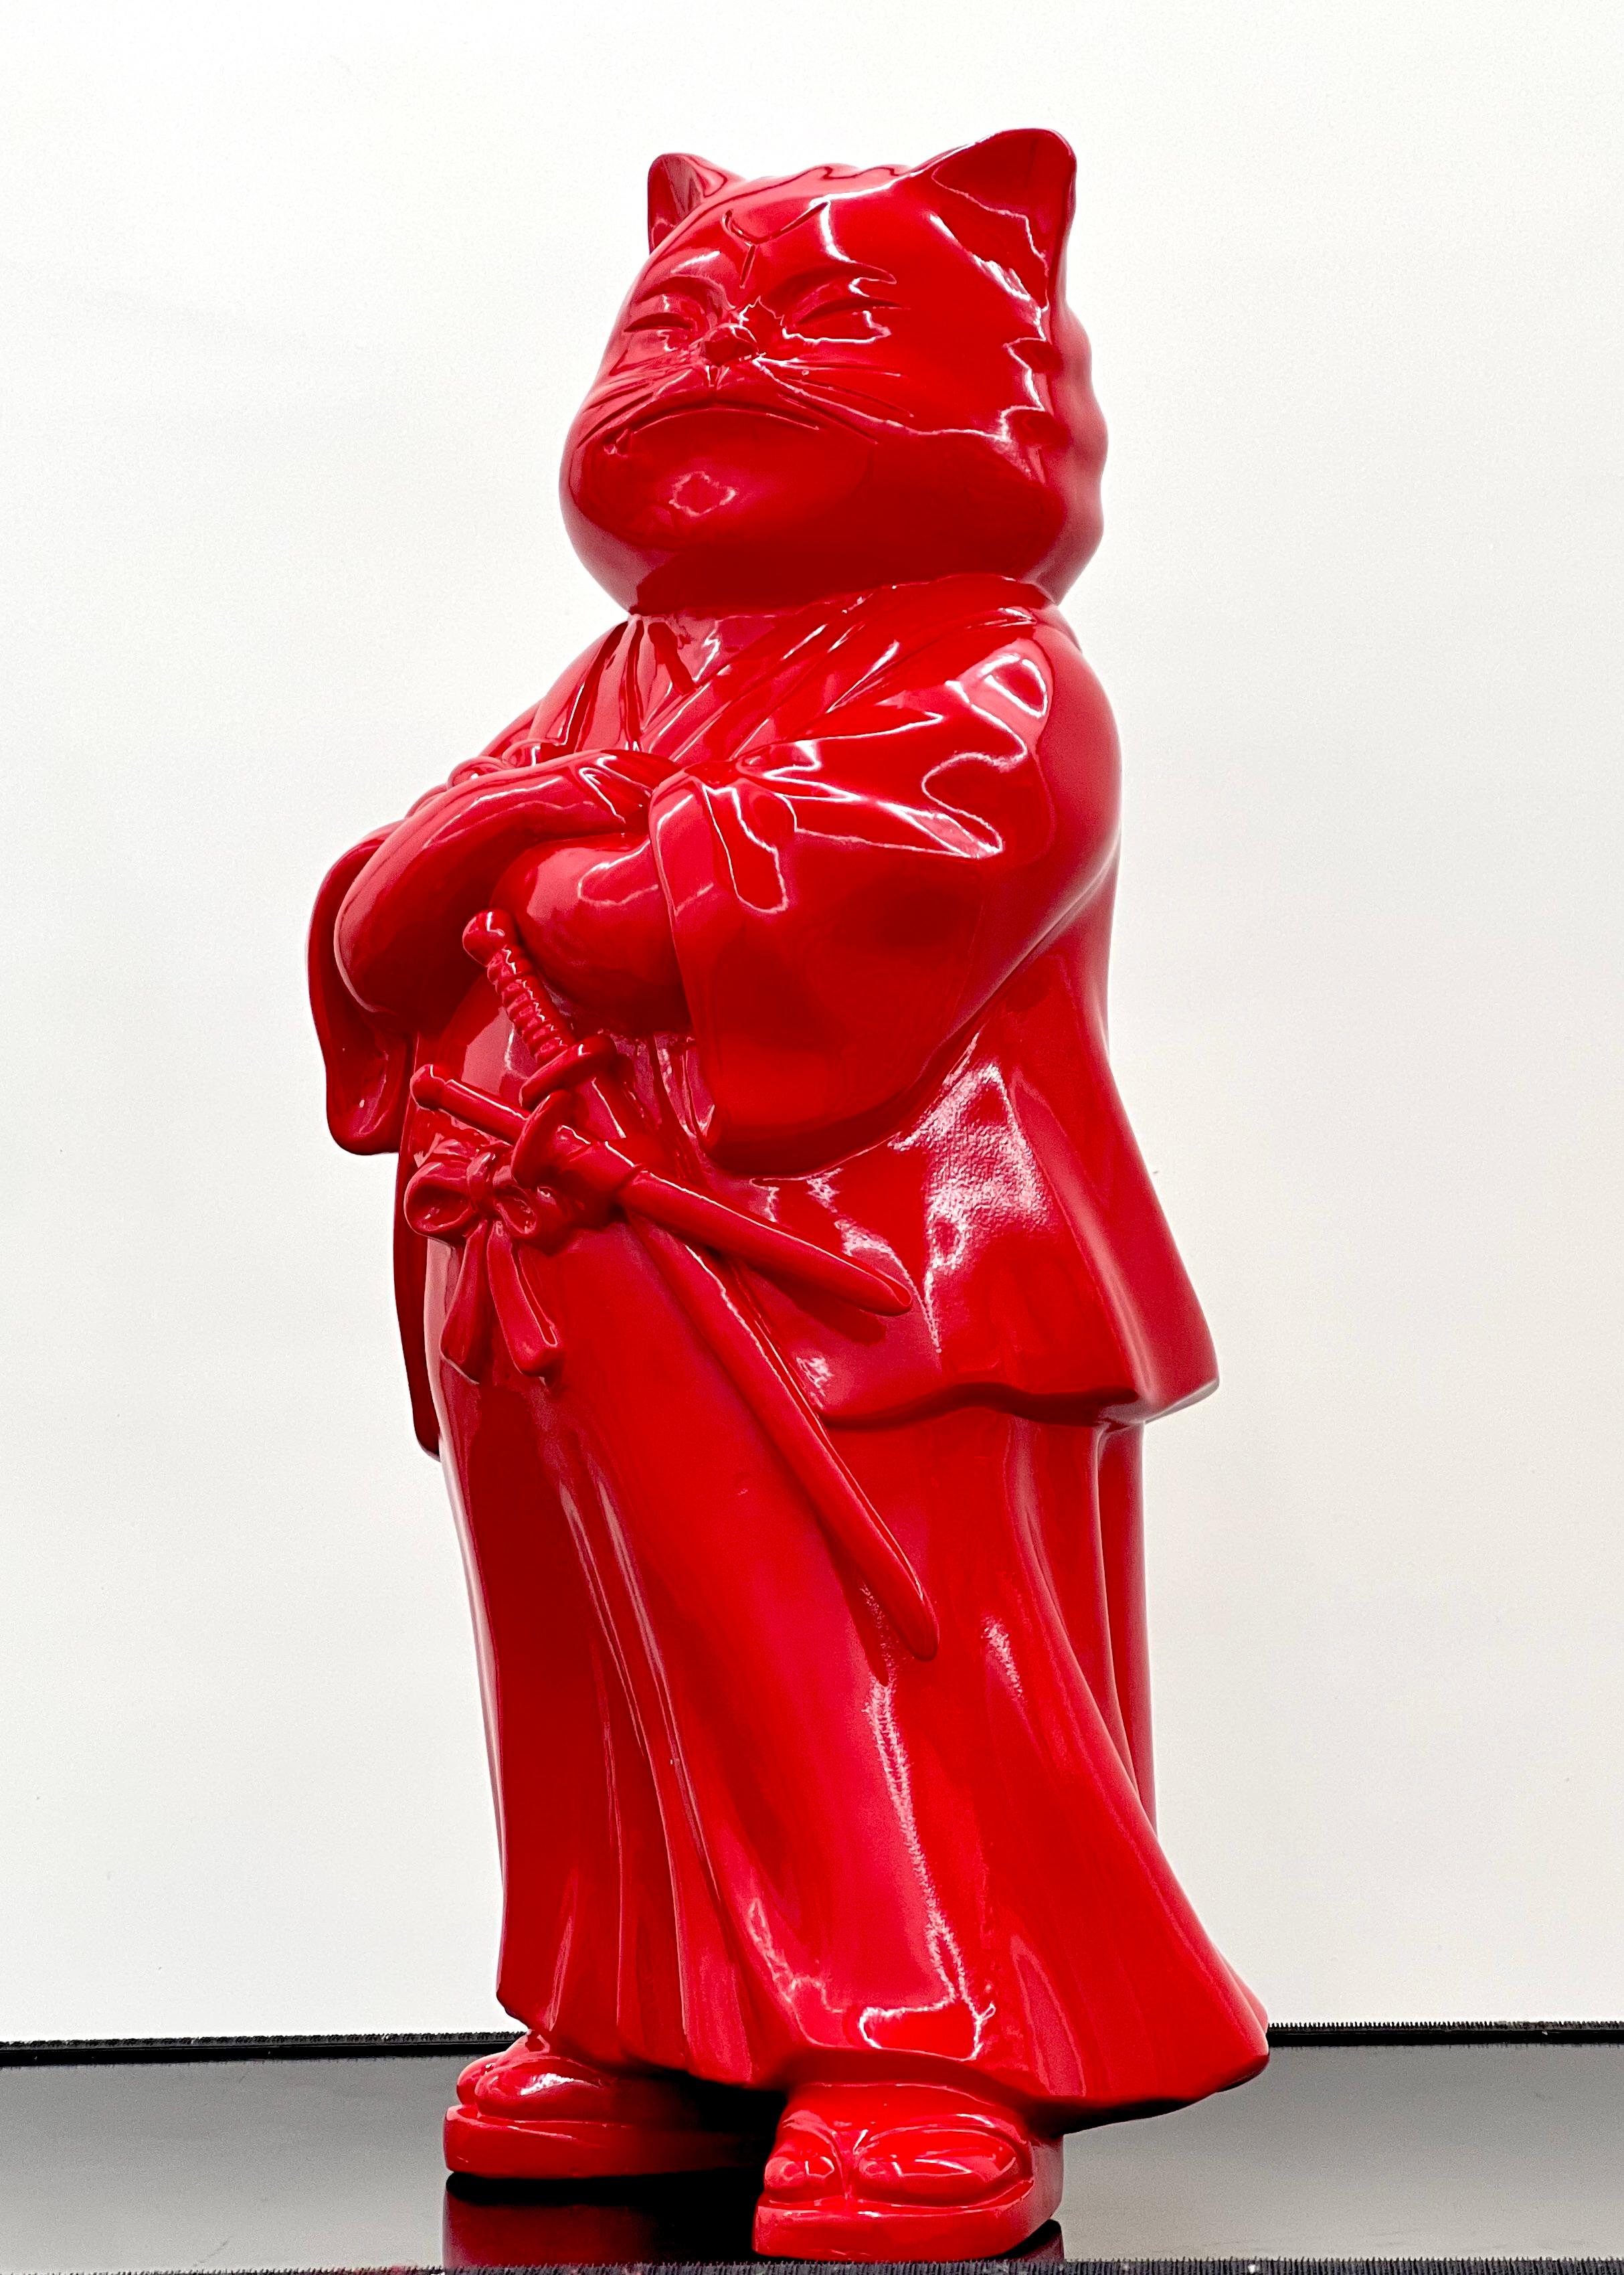 Stance noble de Shoguncat : Red Regal Vigor - Contemporain Sculpture par HIRO ANDO